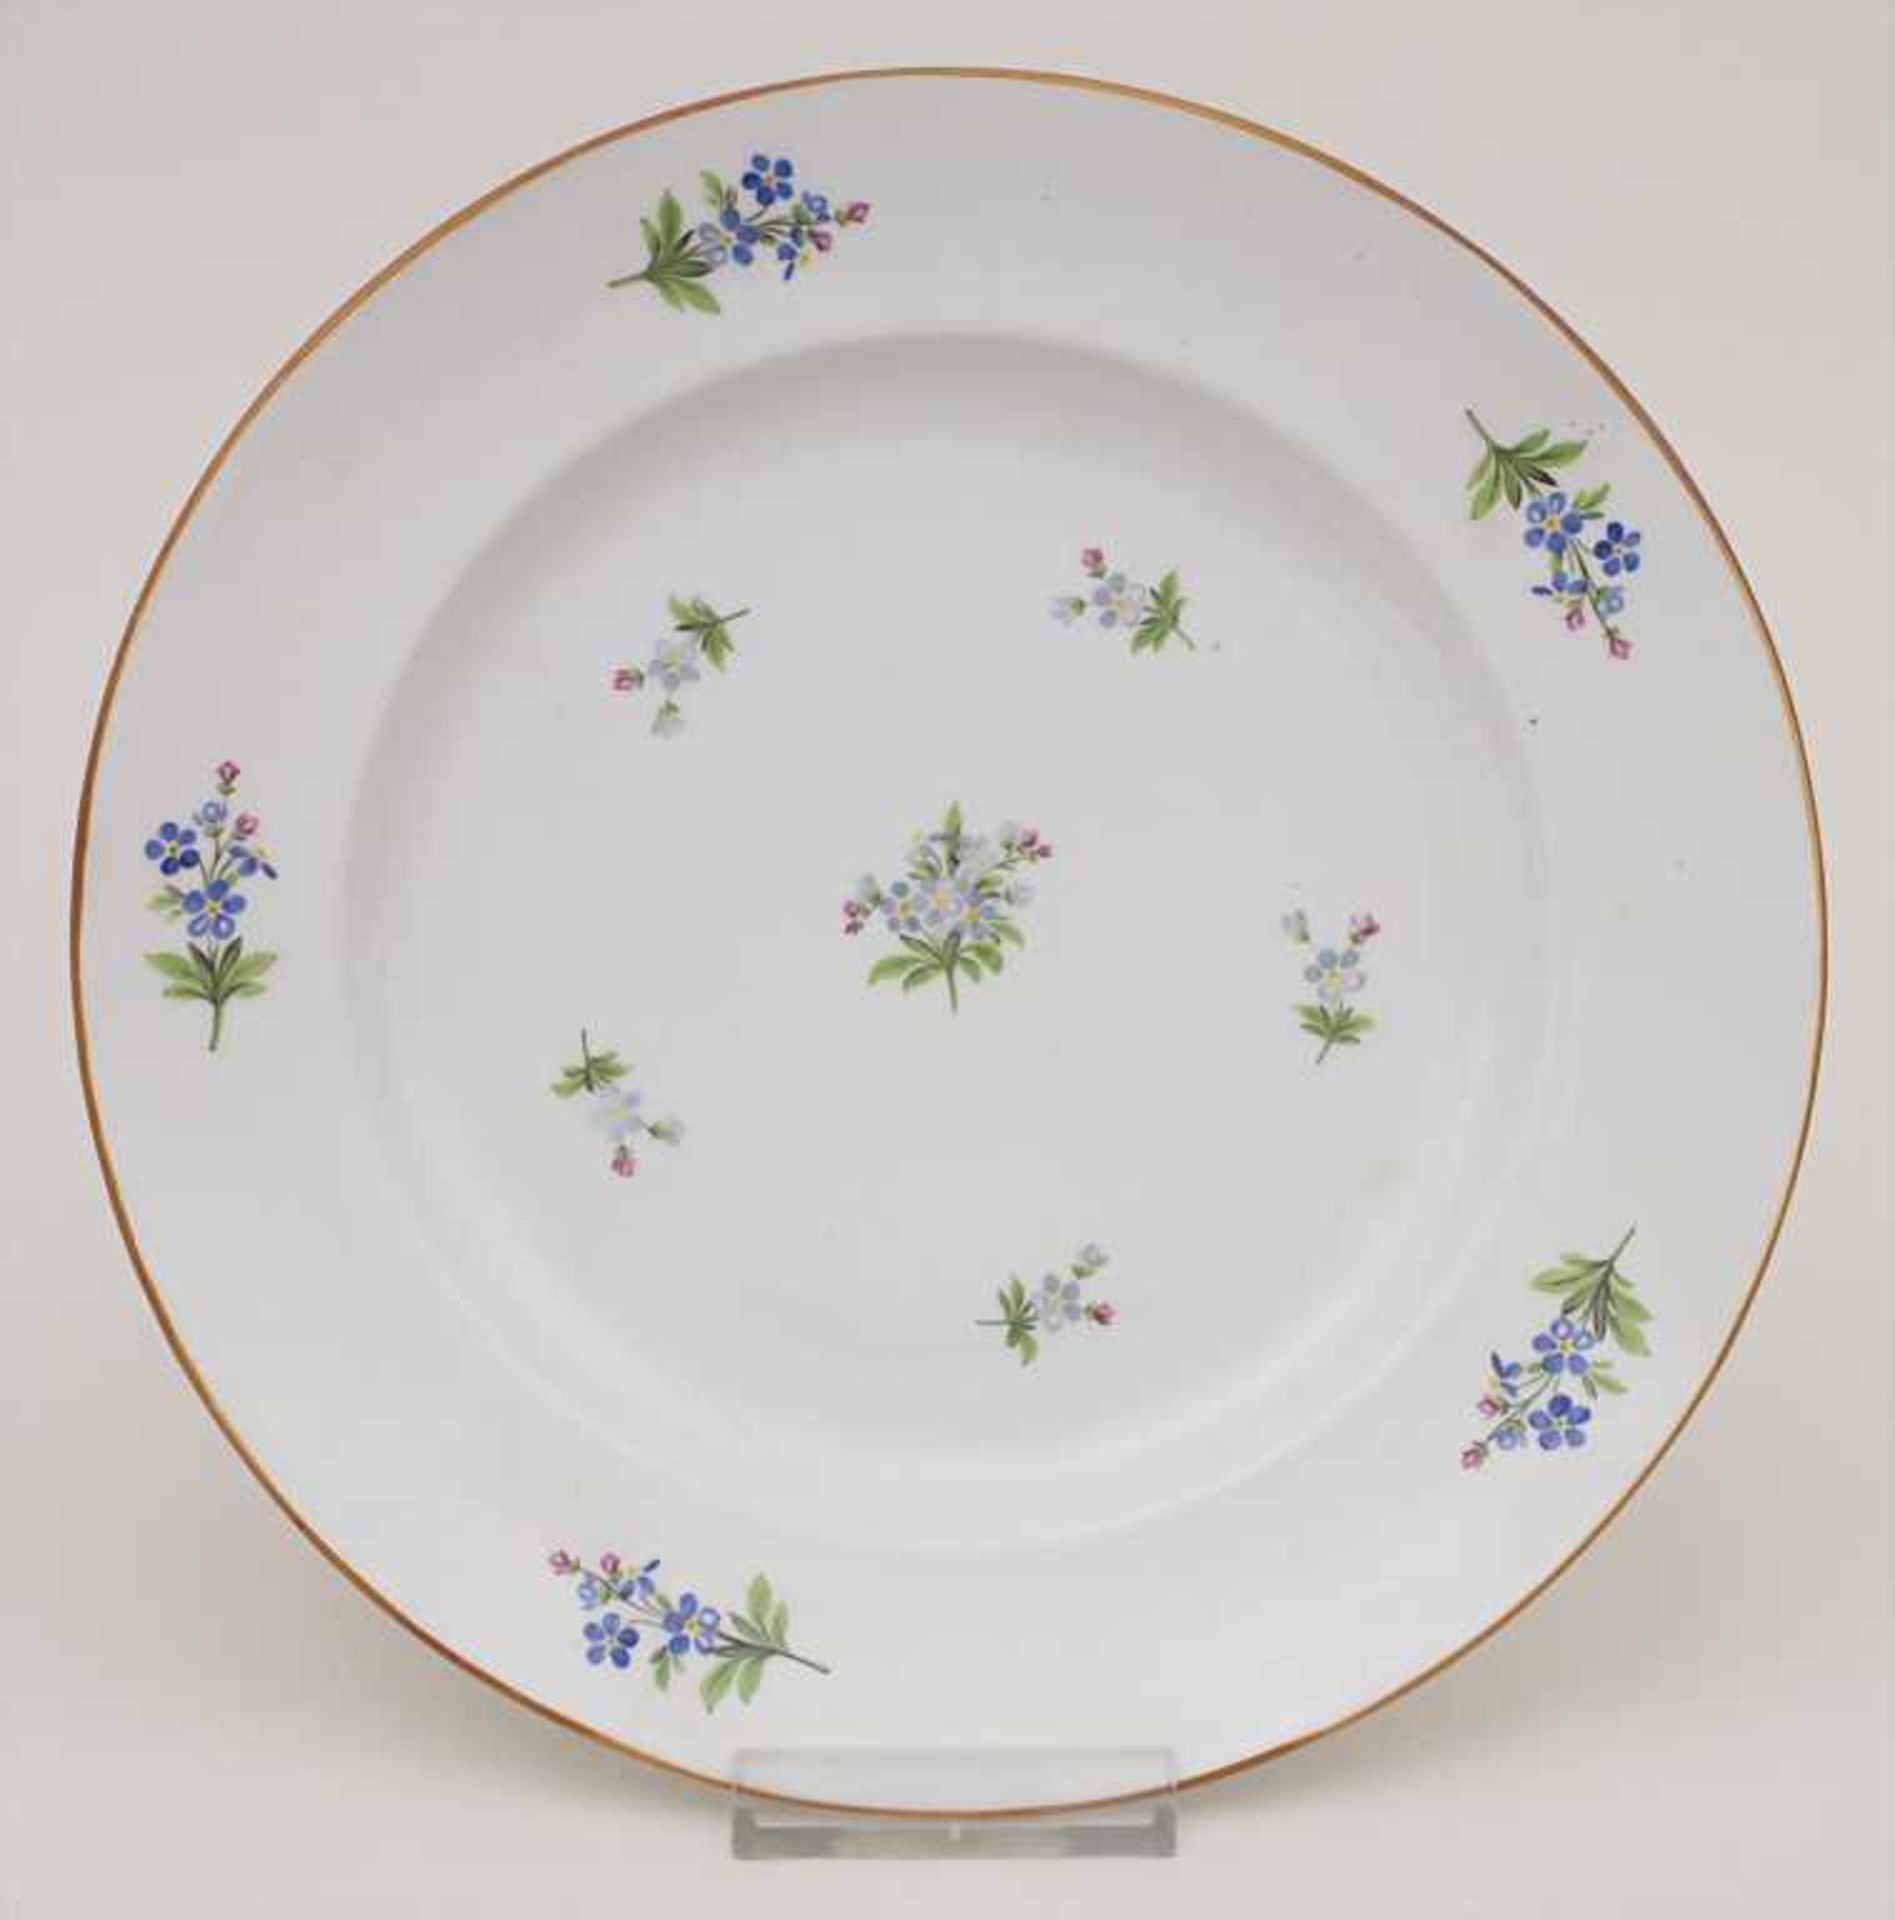 Speiseteller 'Vergissmeinnicht' / A plate 'Forgetmenot', Meissen, 1774-1814Material: Porzellan,